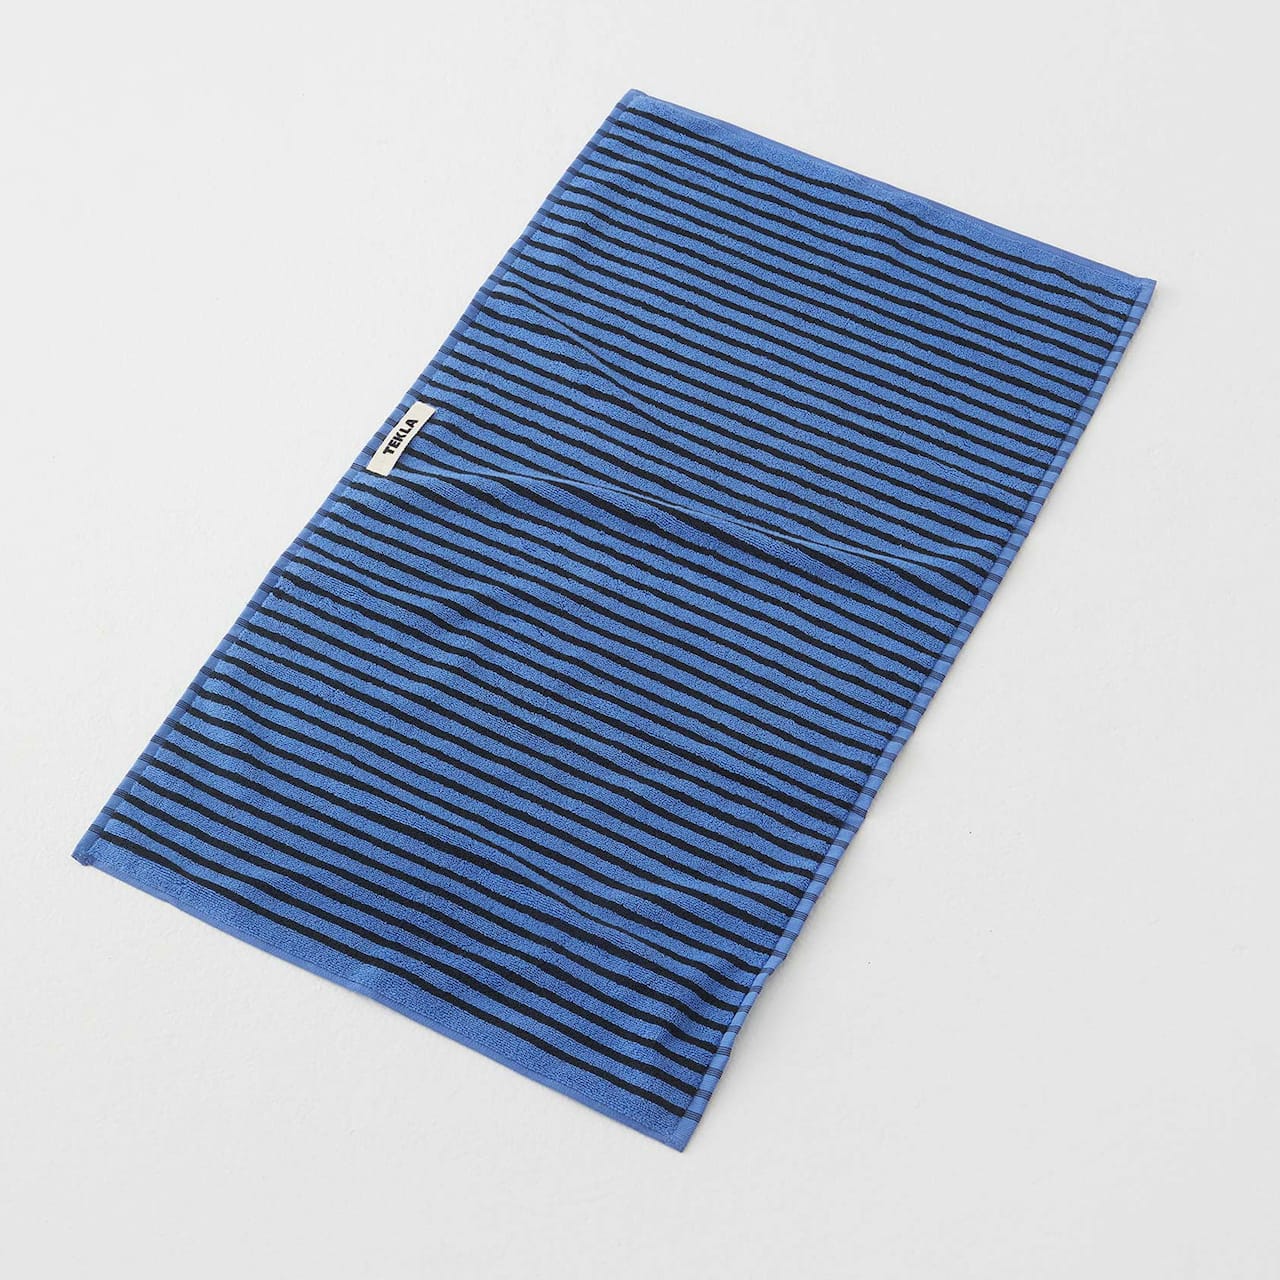 Terry Towel Black & Blue Stripes